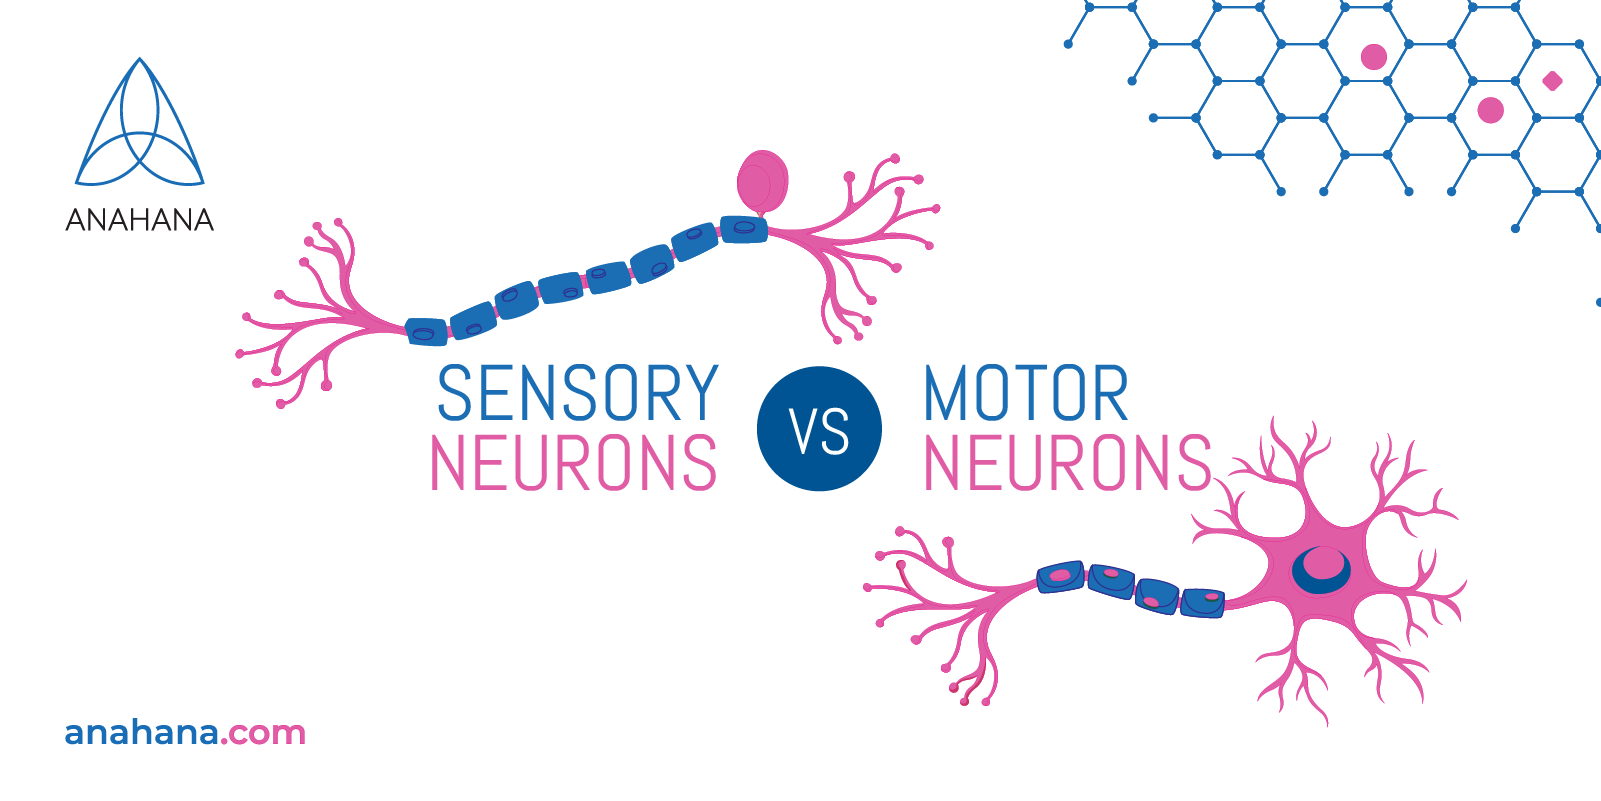 sensory-neurons-and-motor-neurons-fourth-website